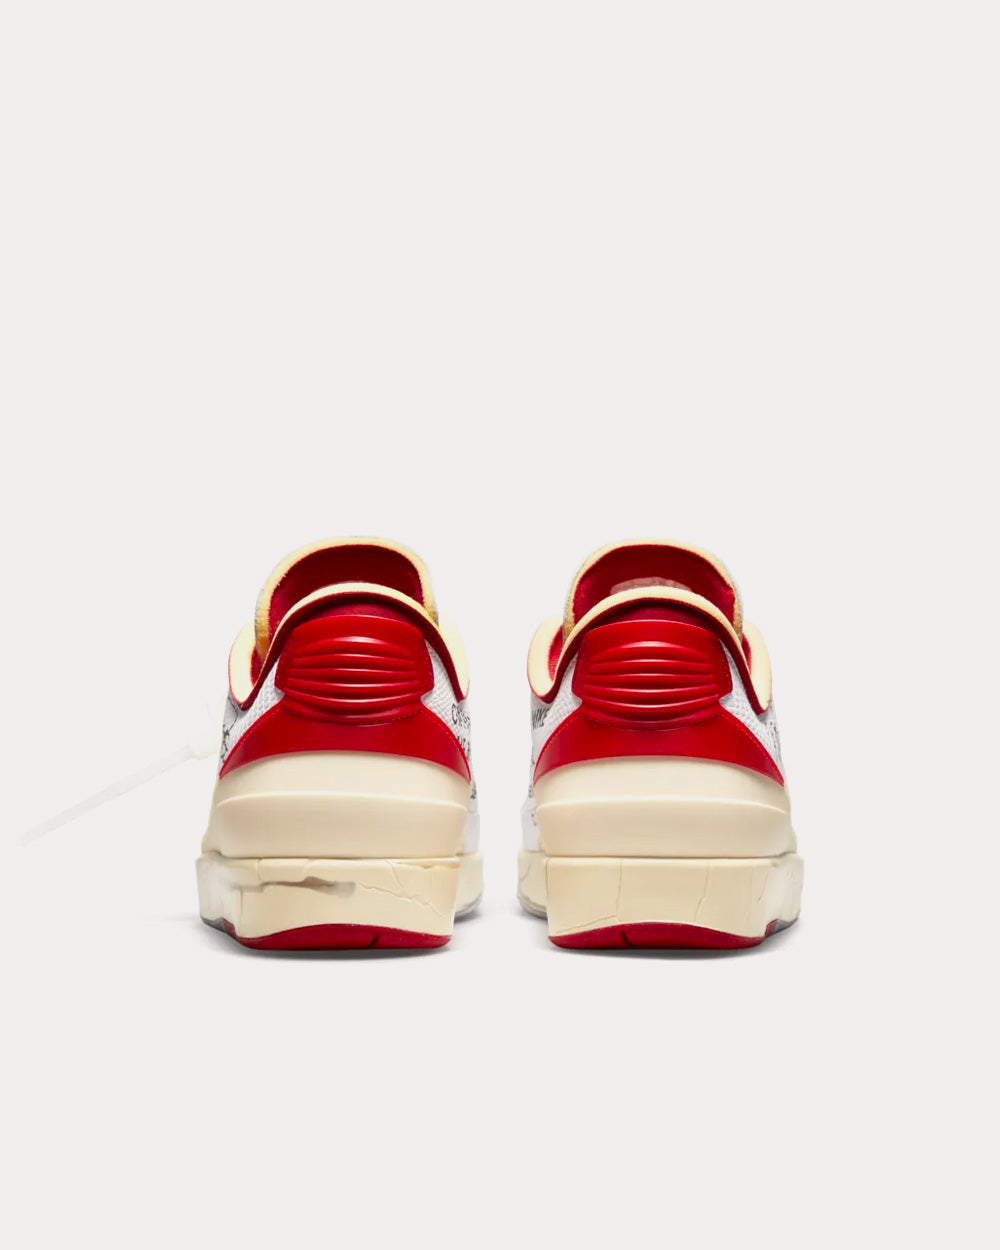 Nike x Off-White Air Jordan 2 Low White and Varsity Red Low Top Sneakers -  Sneak in Peace